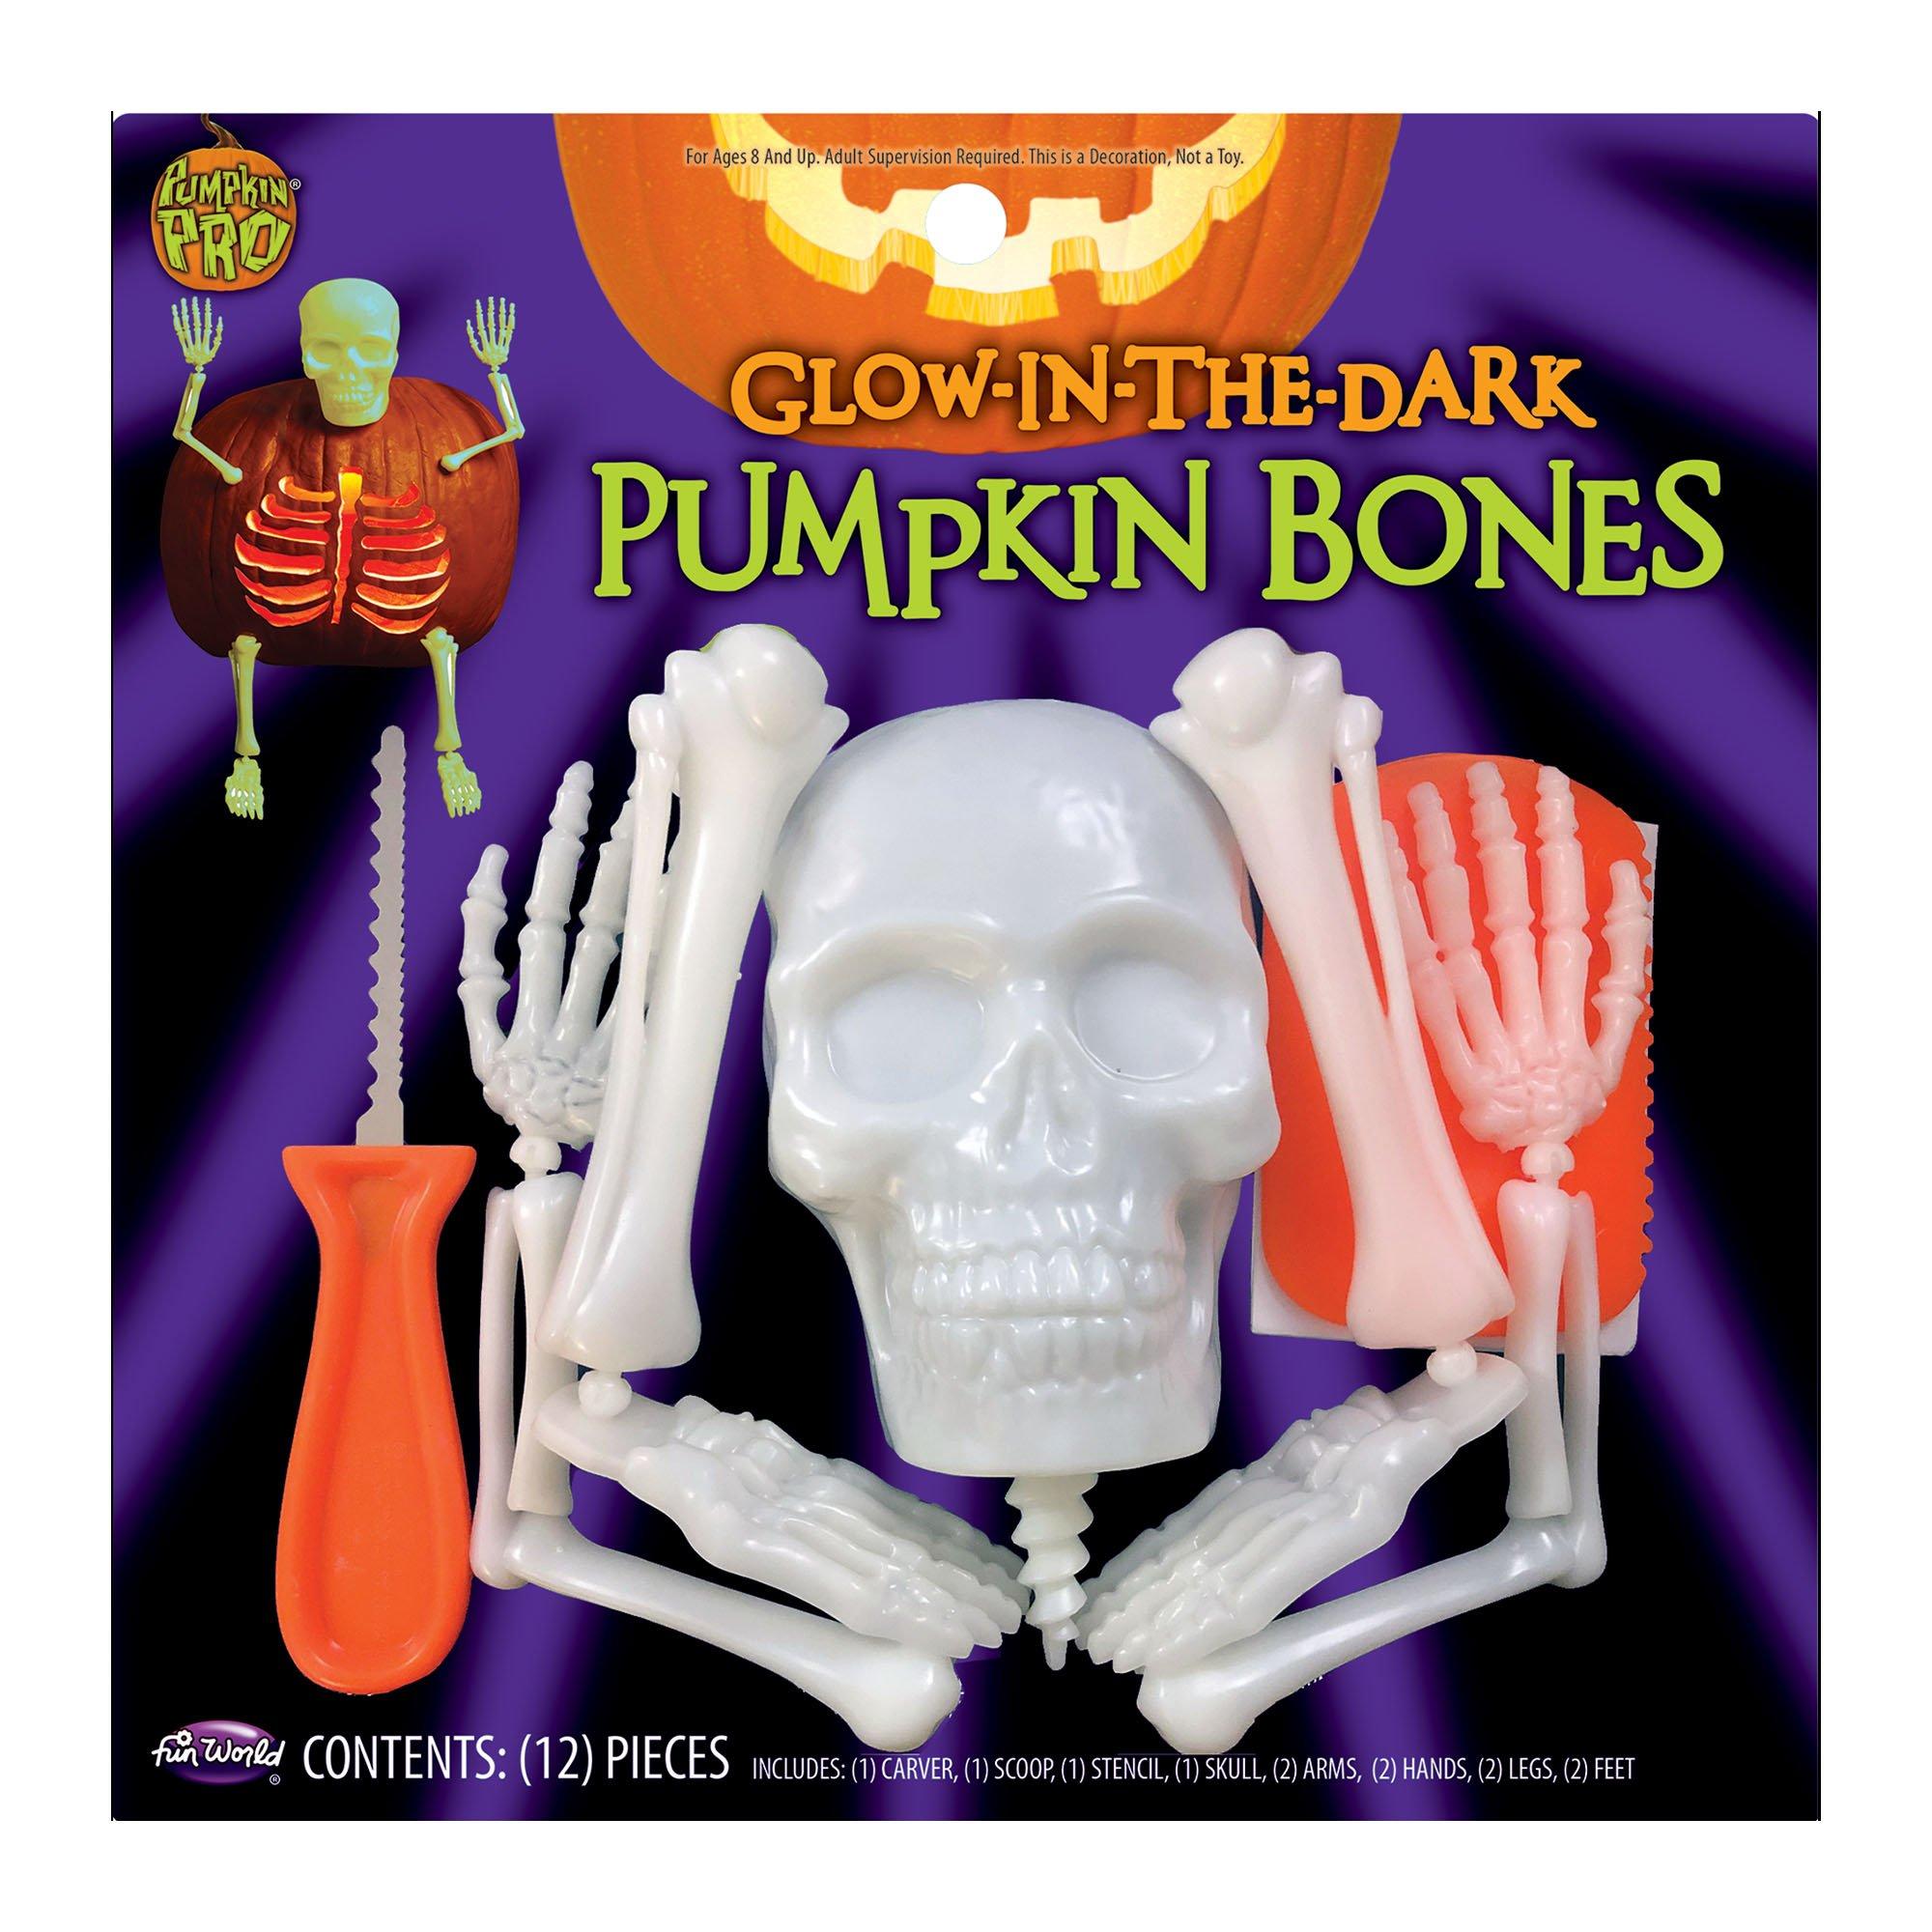 Glow-in-the-Dark Pumpkin Bones Carving Kit | Party City